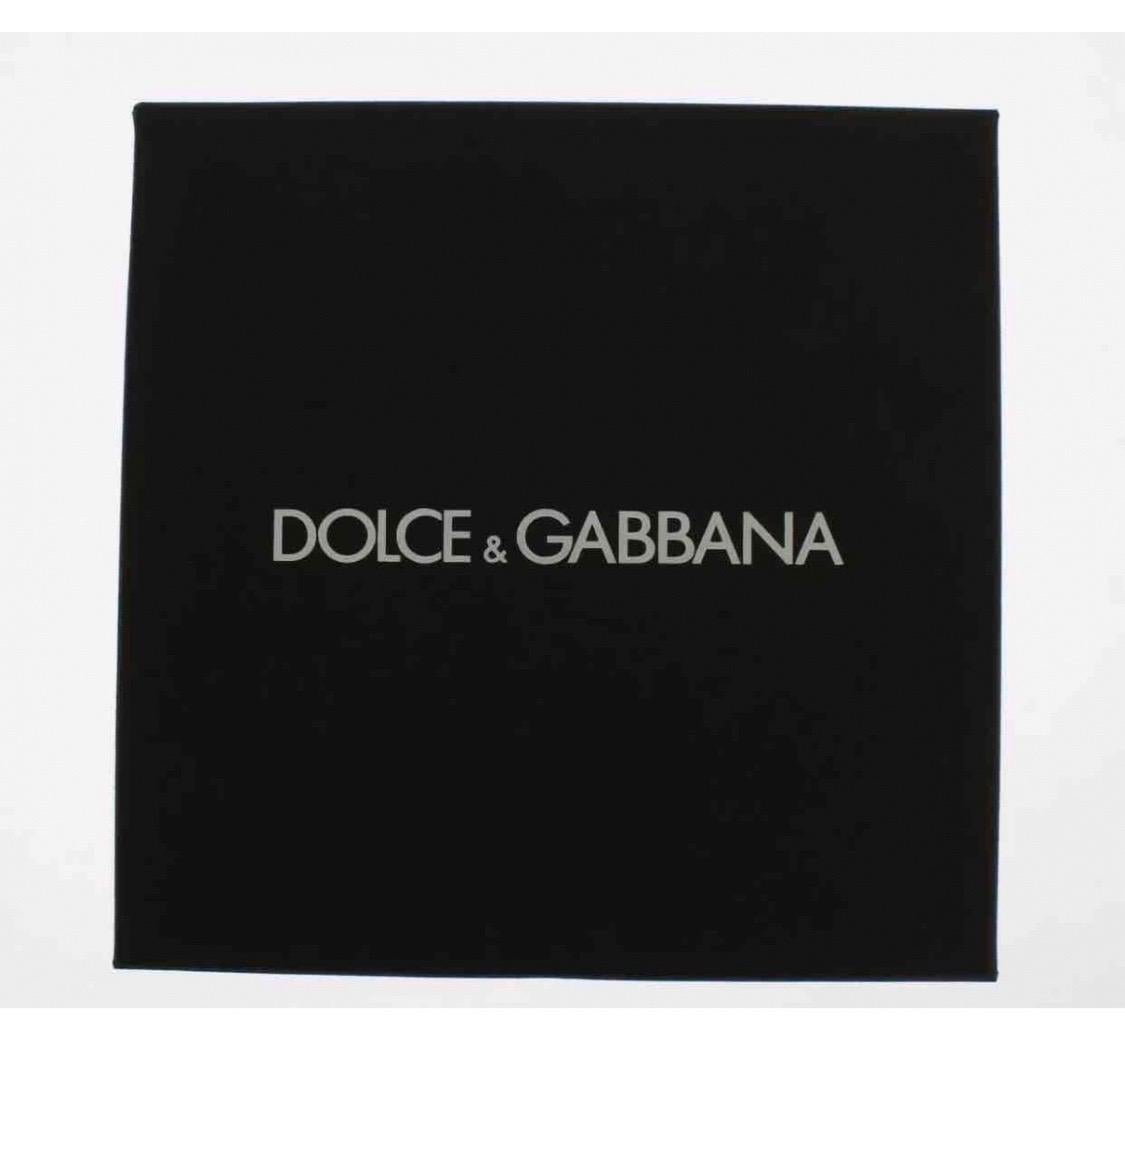 Dolce & Gabbana black #Queen
headband hair accessory tiara 2